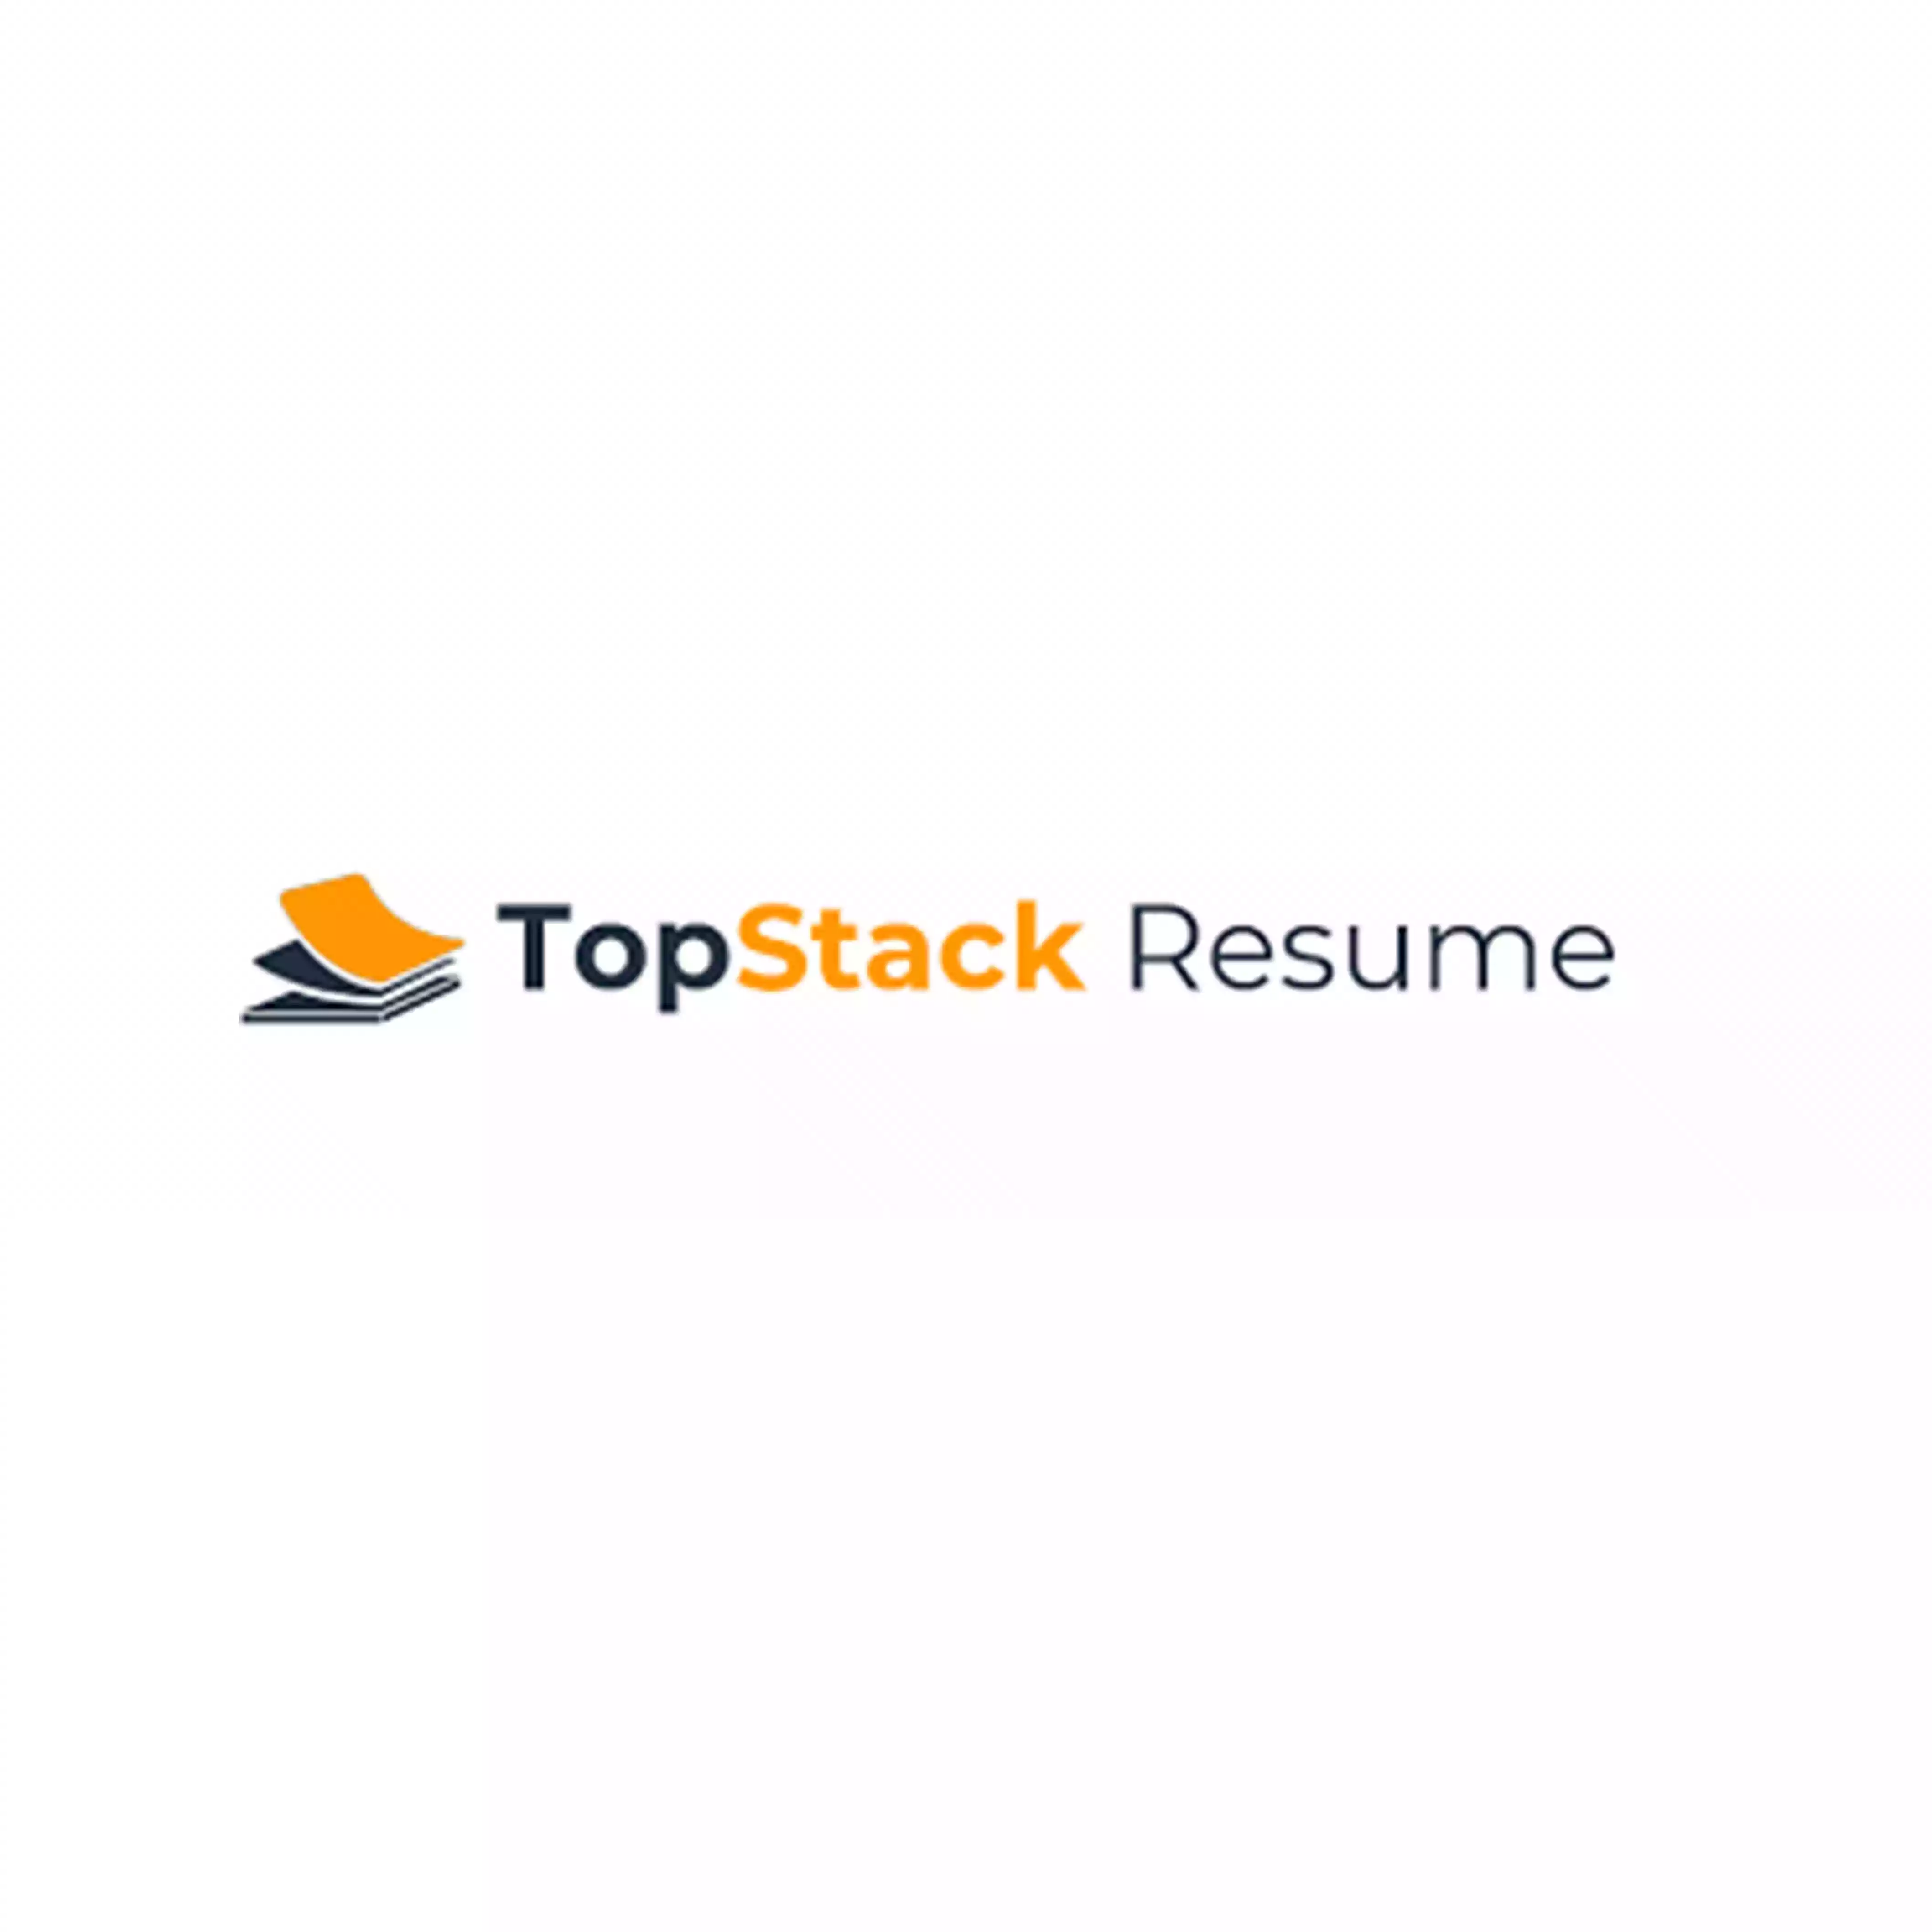 TopStack Resume coupon codes